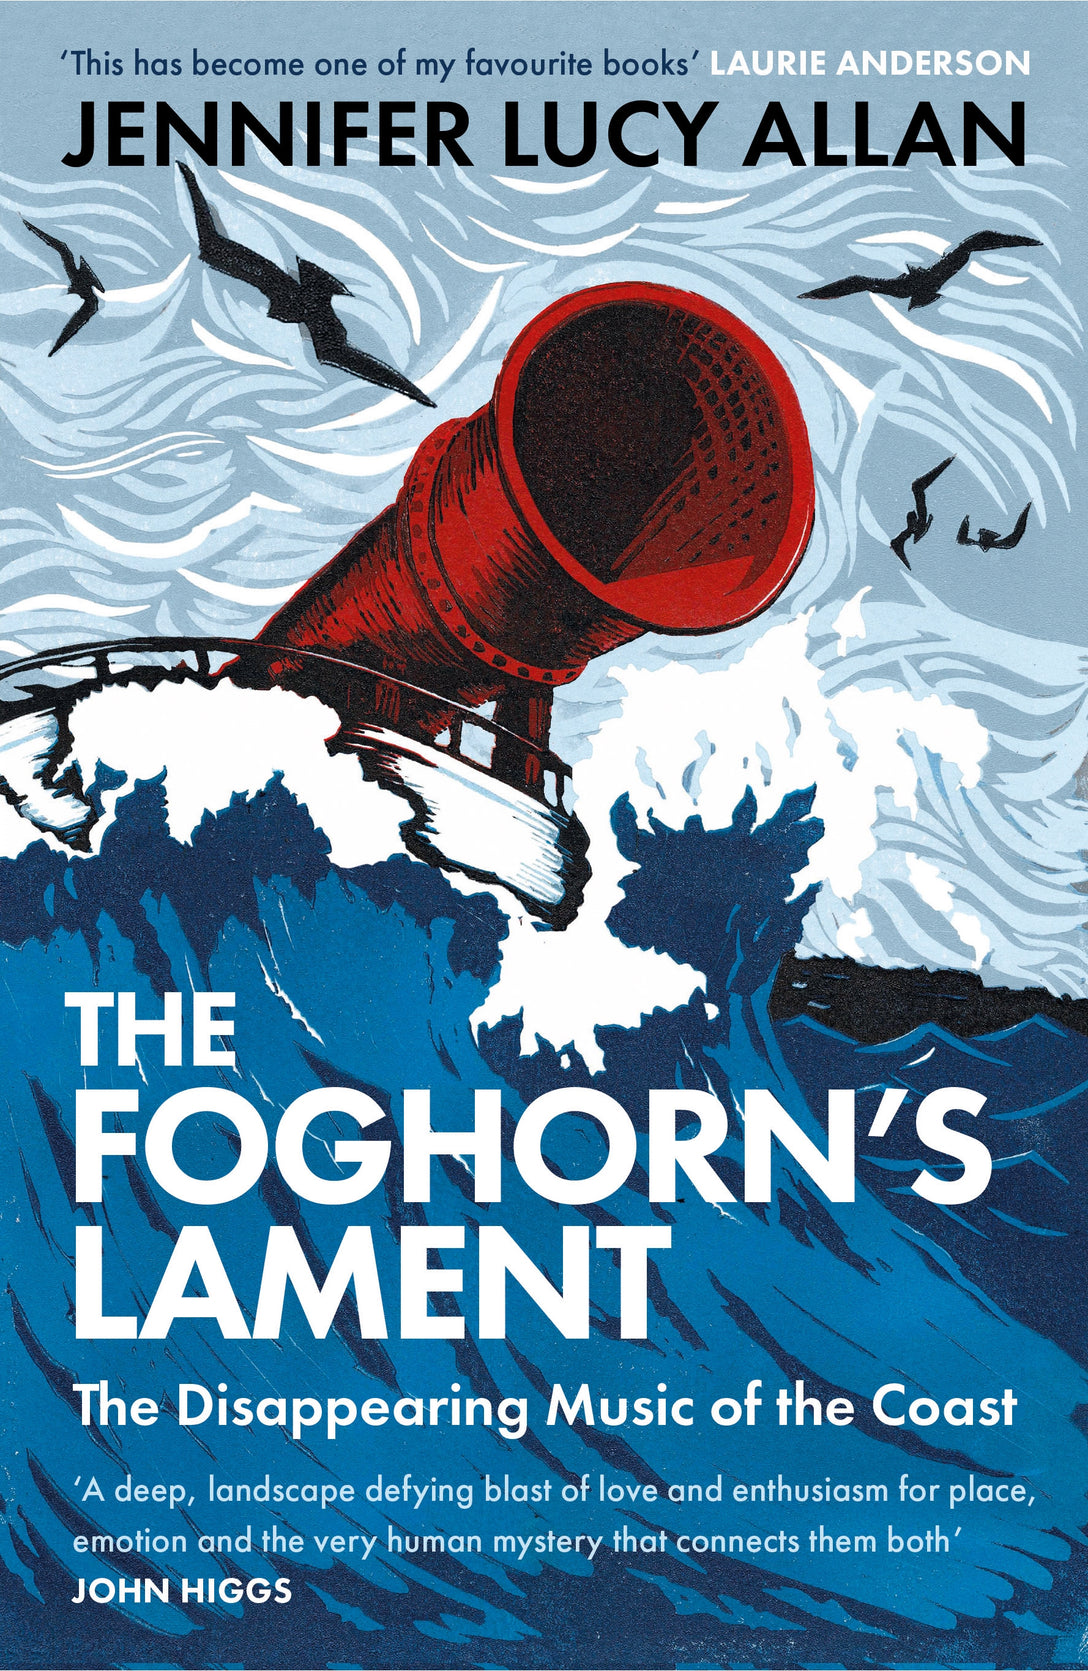 The Foghorn's Lament by Jennifer Lucy Allan